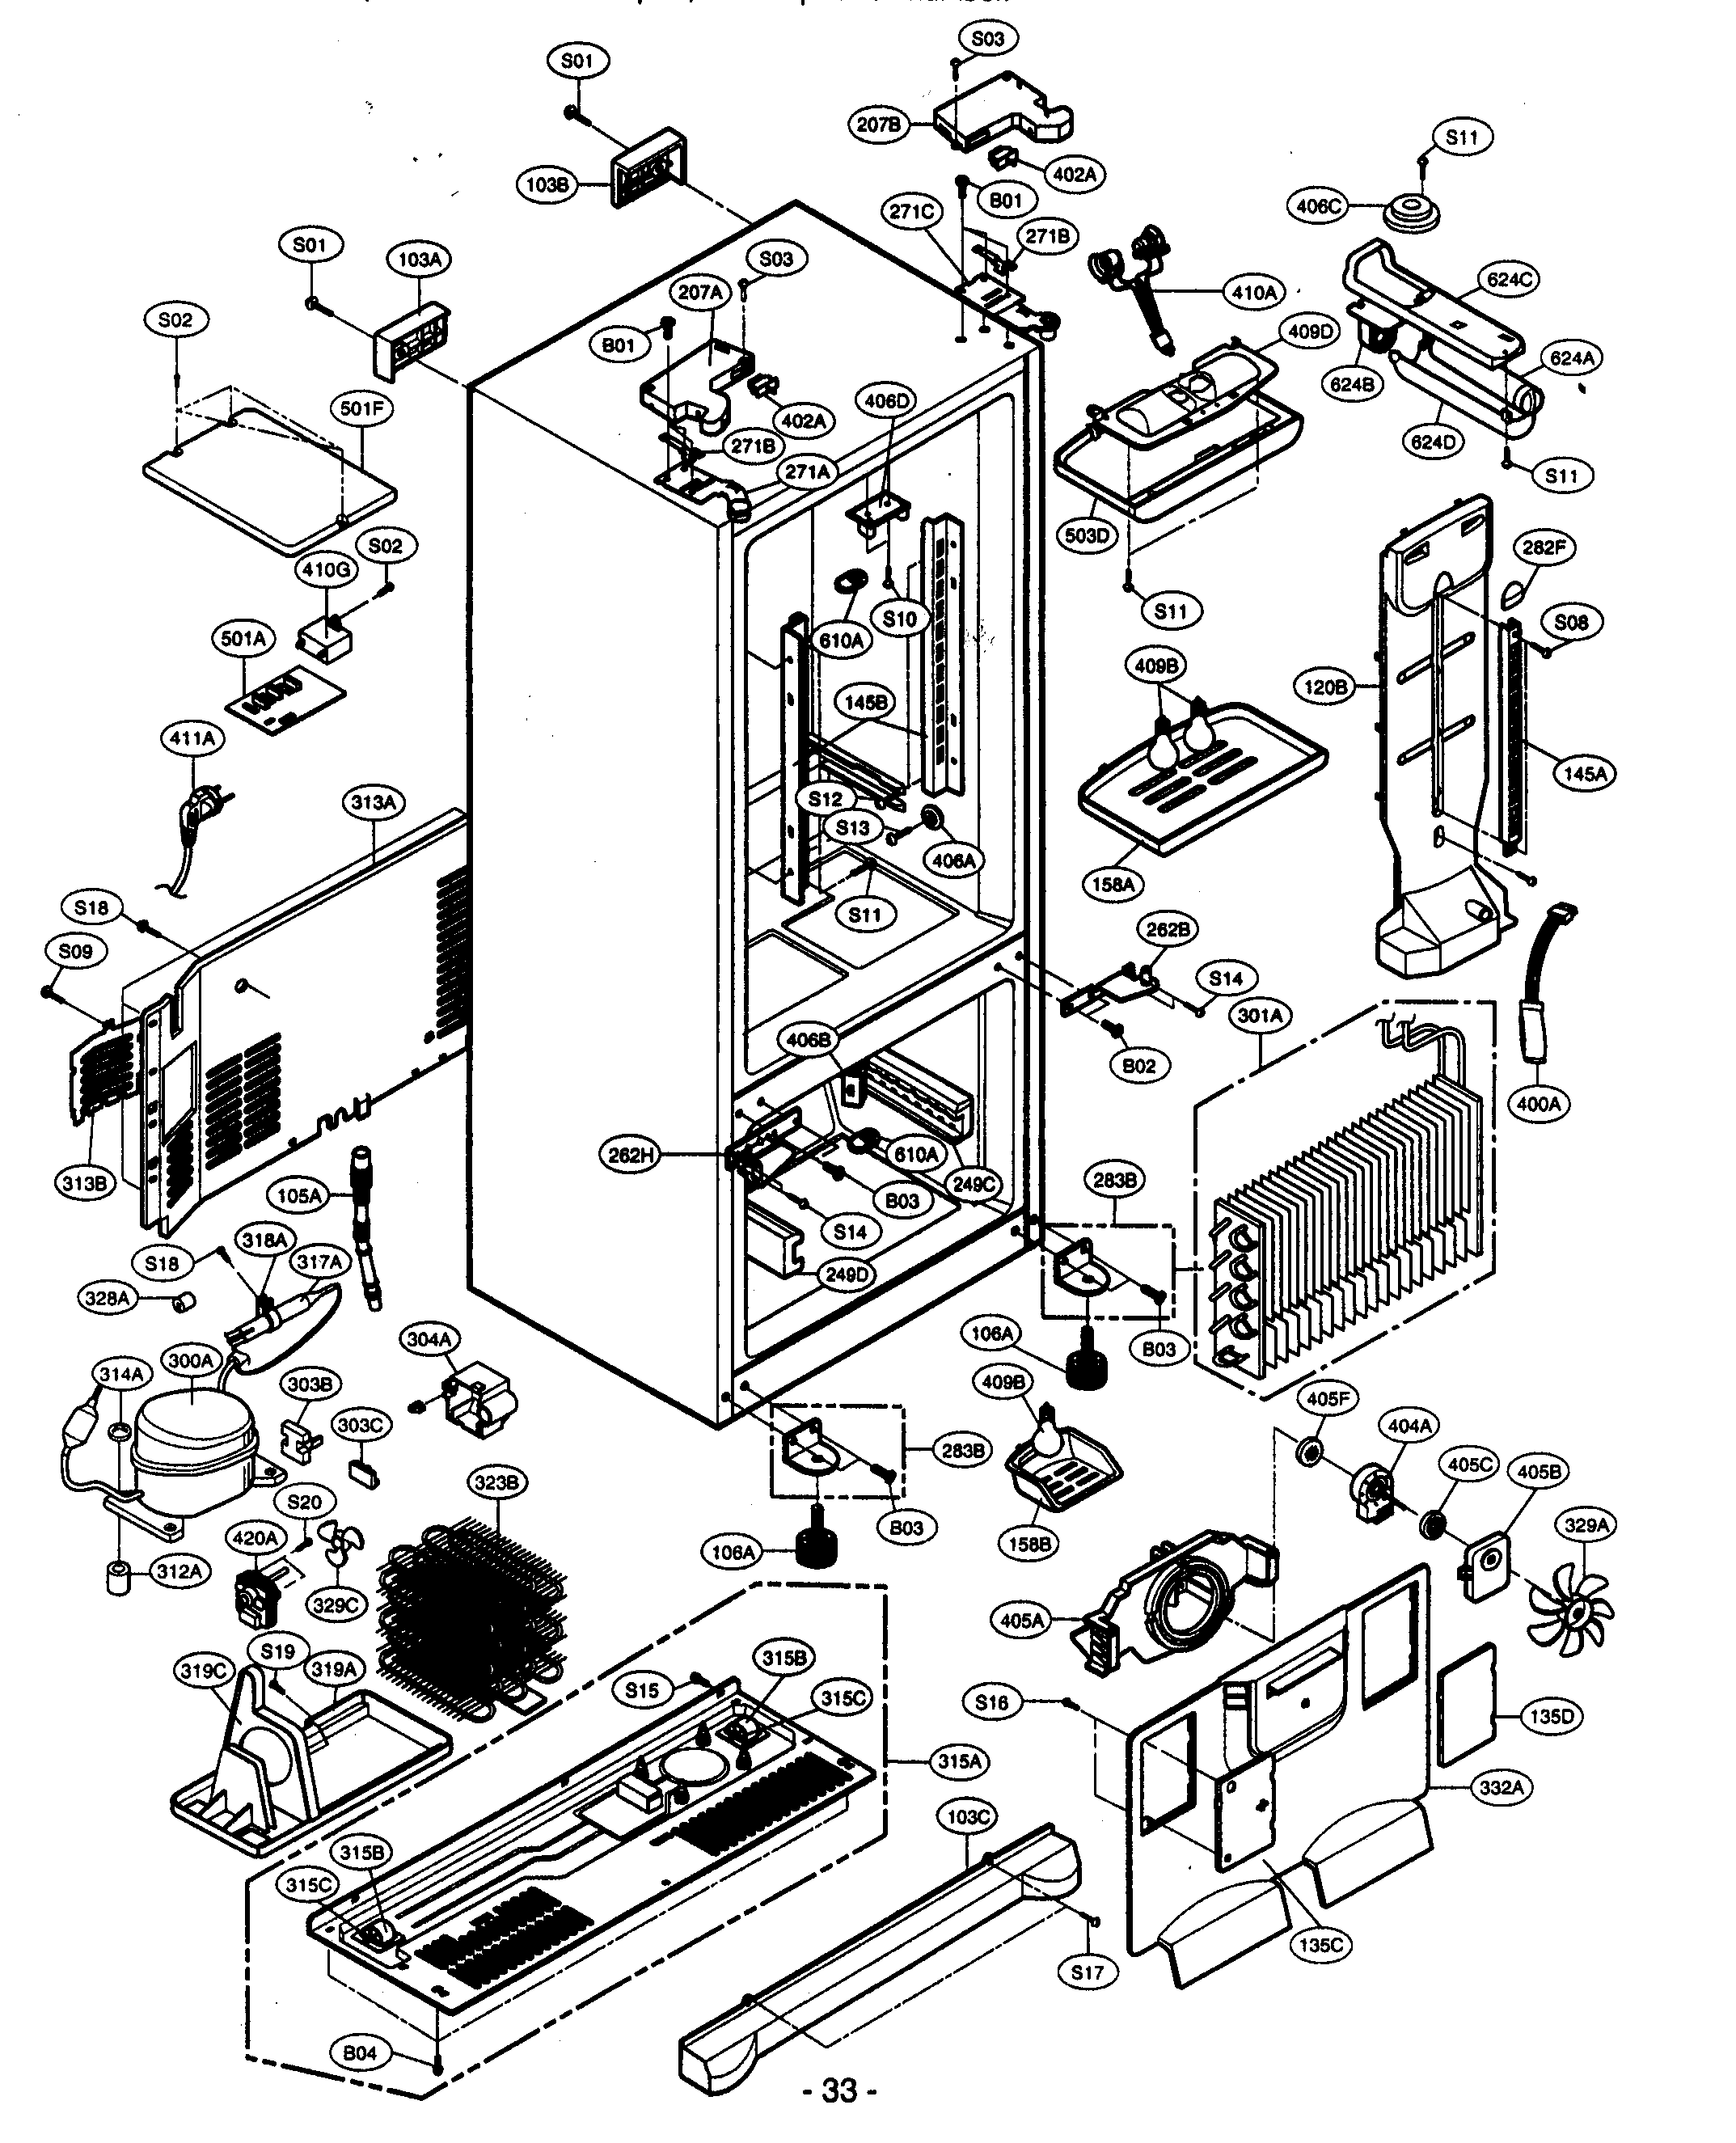 Kenmore elite refrigerator model 795 manual